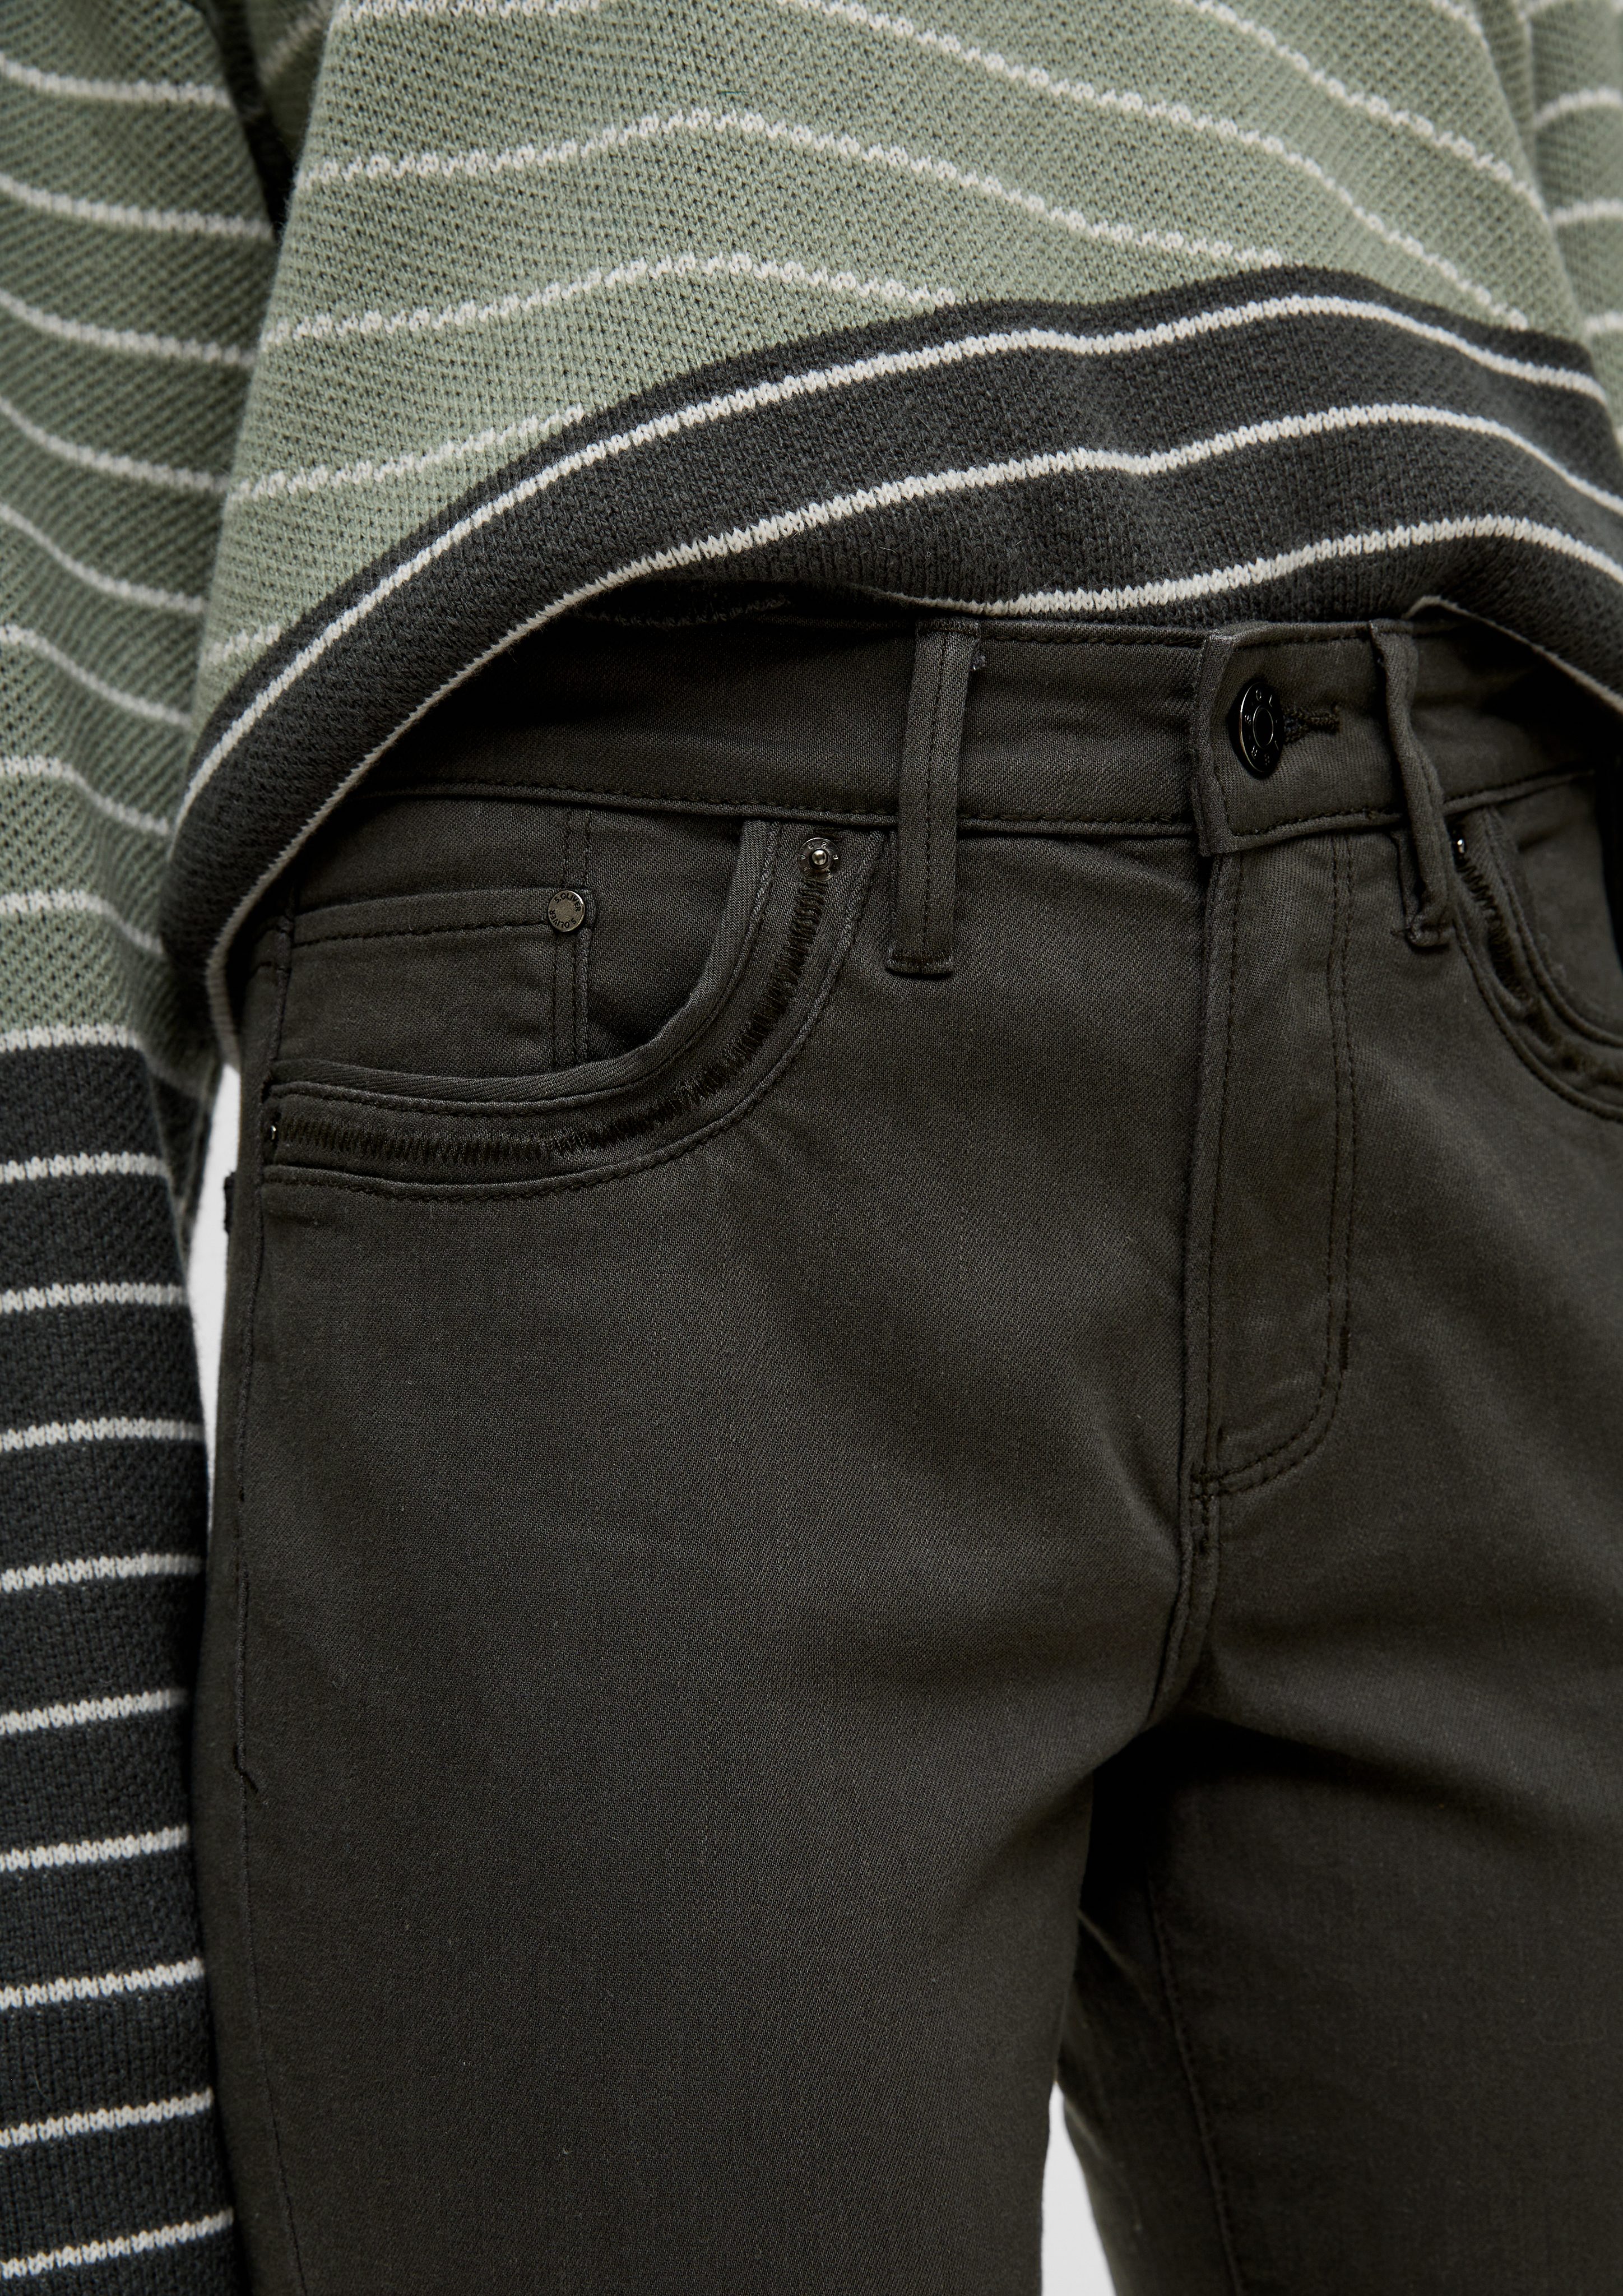 s.Oliver 5-Pocket-Jeans Jeans Stickerei, Betsy olivgrün Label-Patch Fit Mid / Slim Leg / Slim Rise 